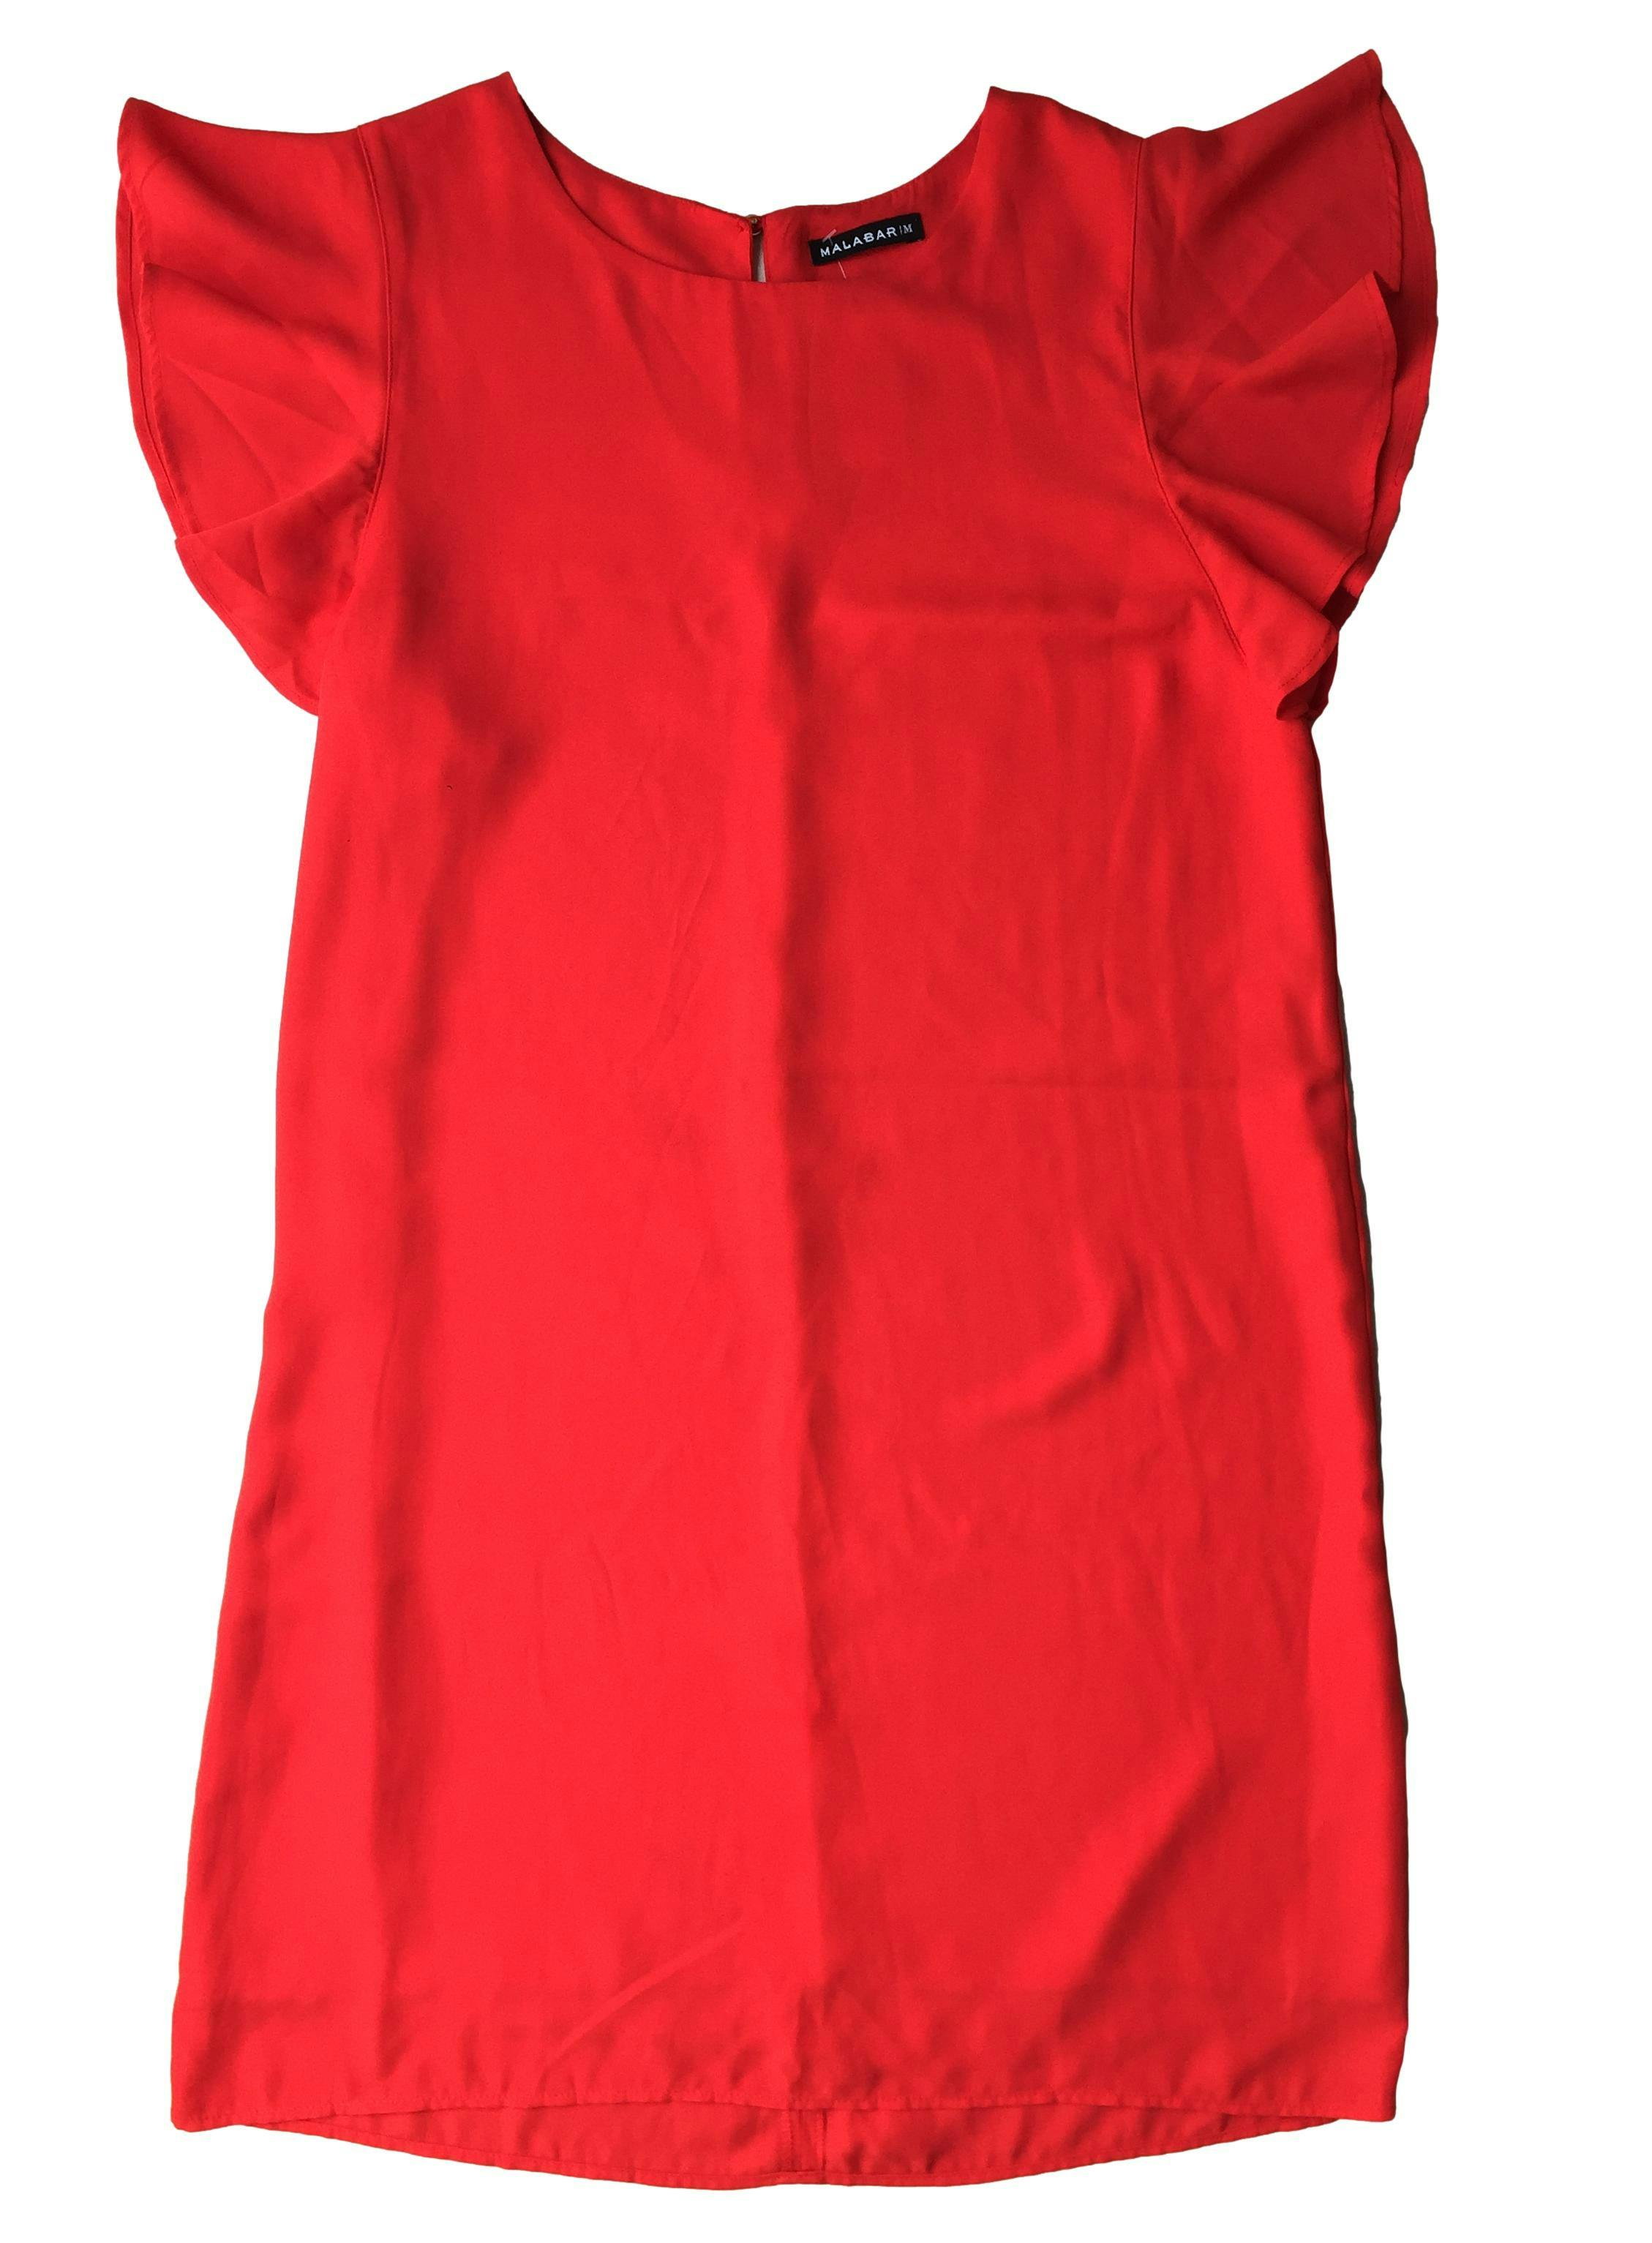 Vestido rojo modelo recto con mangas volantes. Busto 100cm, Largo 90cm.